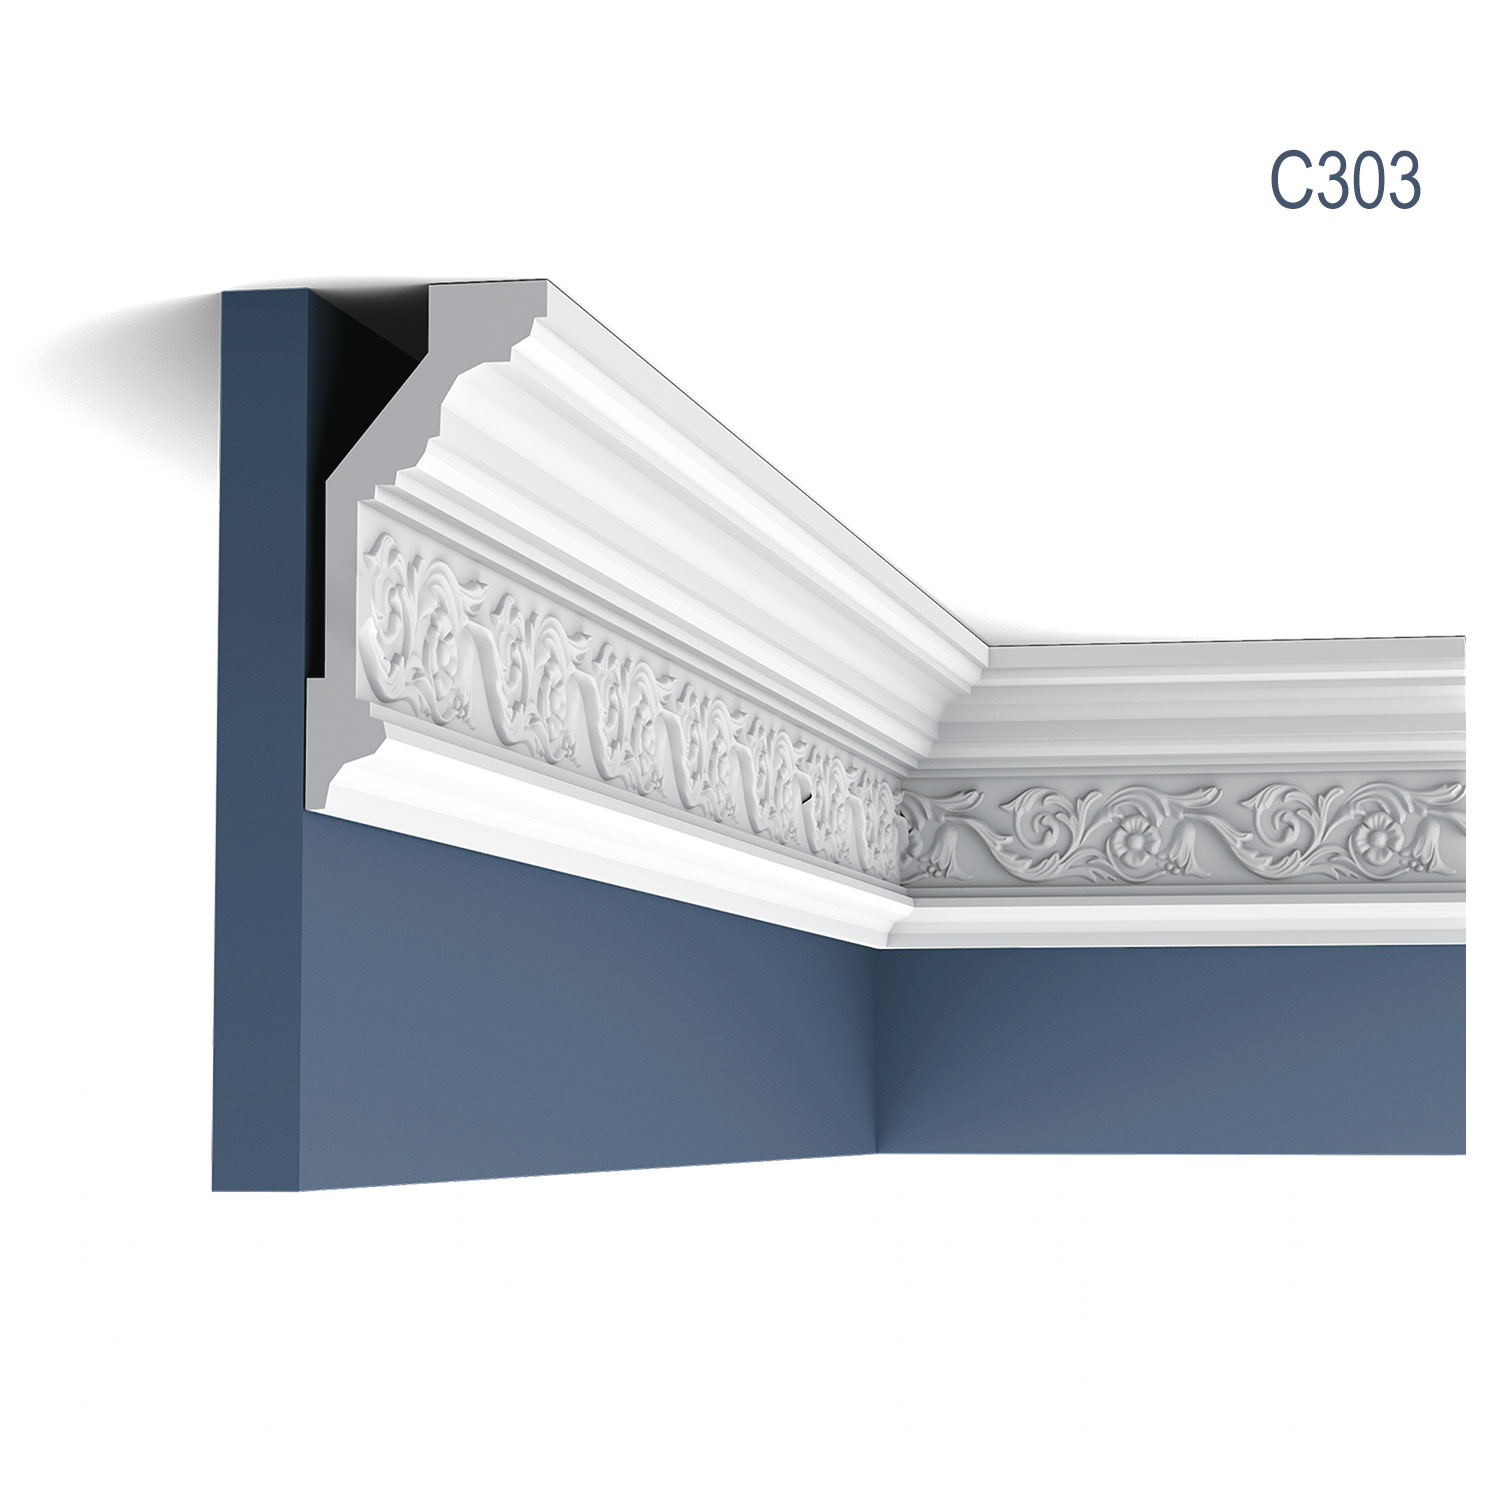 Cornisa Luxxus C303, Dimensiuni: 200 X 14.4 X 6.5 cm, Orac Decor Orac Decor